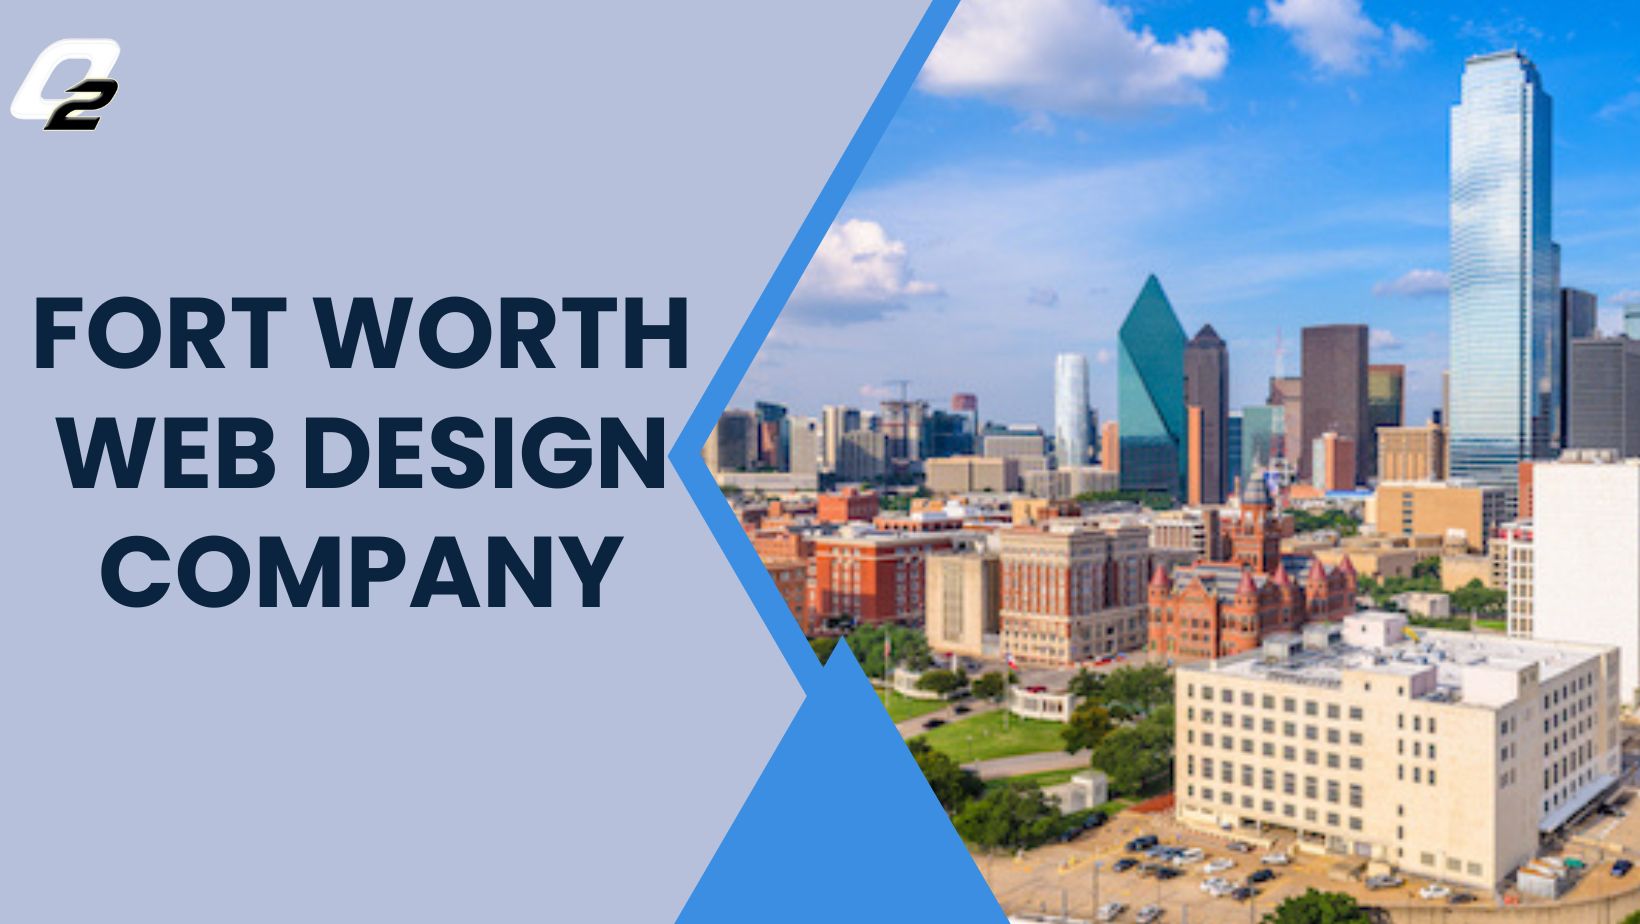 Fort Worth Web Design company